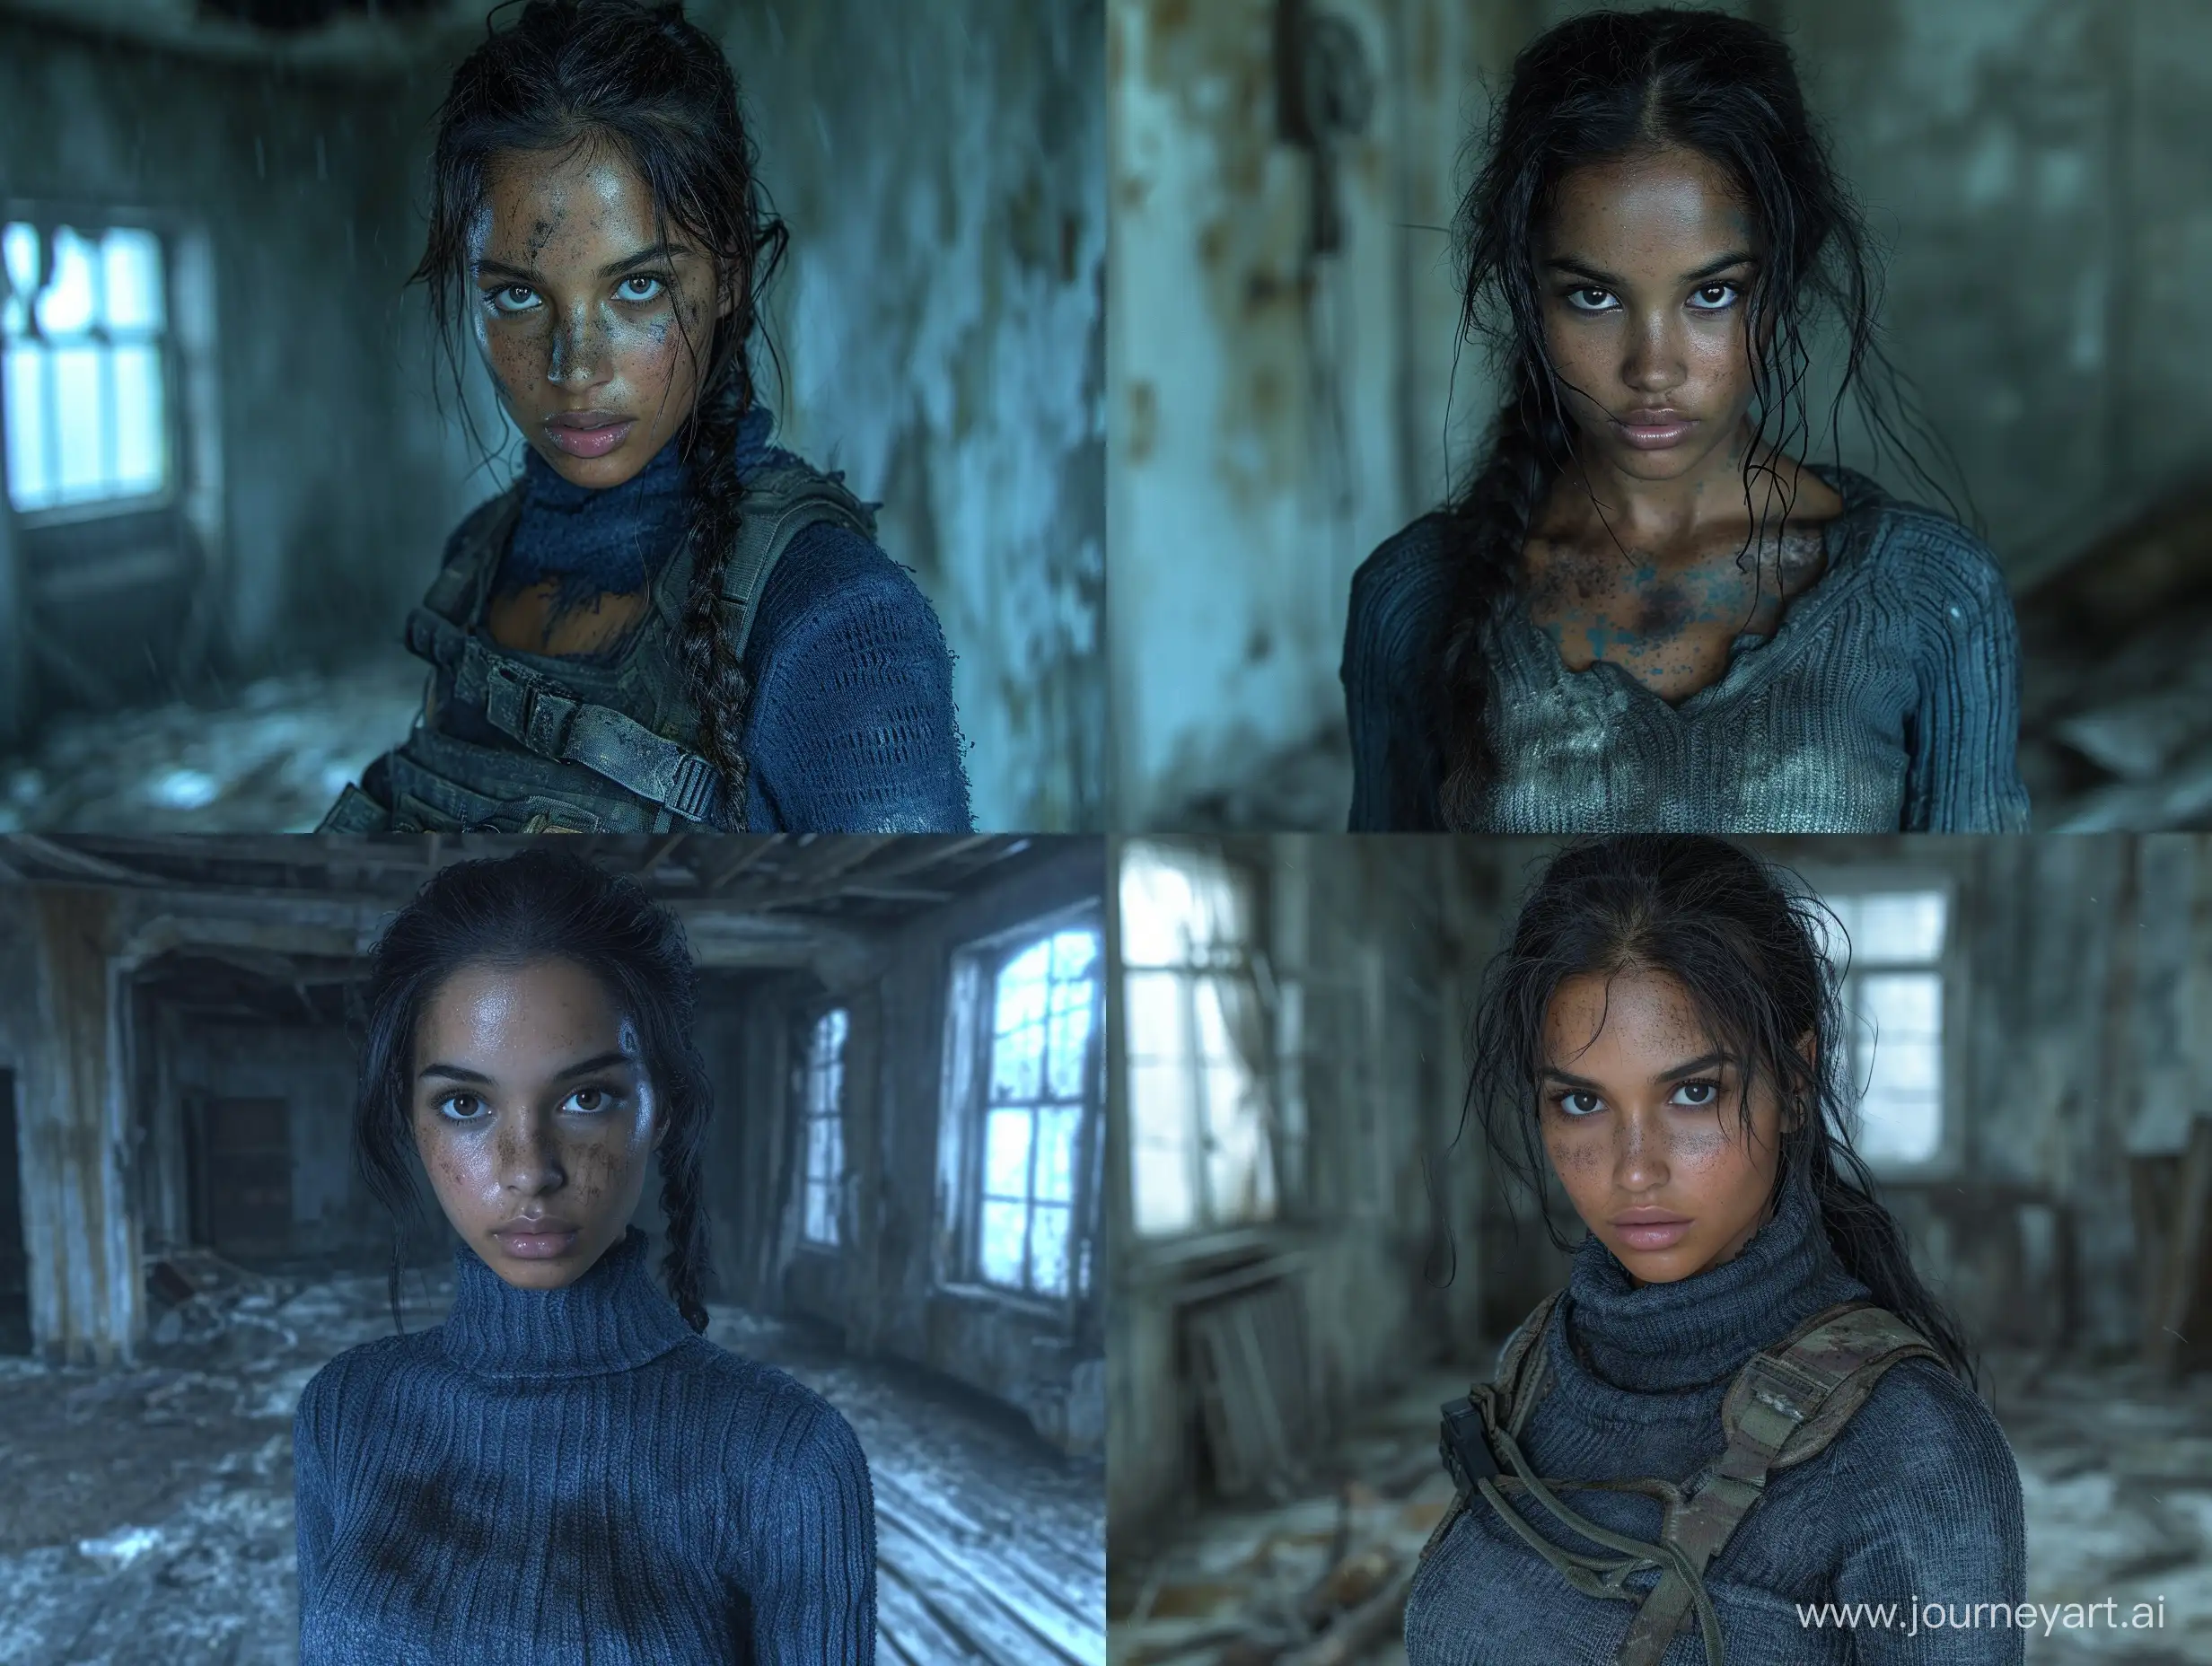 Dark-Skin-Female-Mercenary-Sheva-Alomar-in-Tactical-Sweater-in-Abandoned-Room